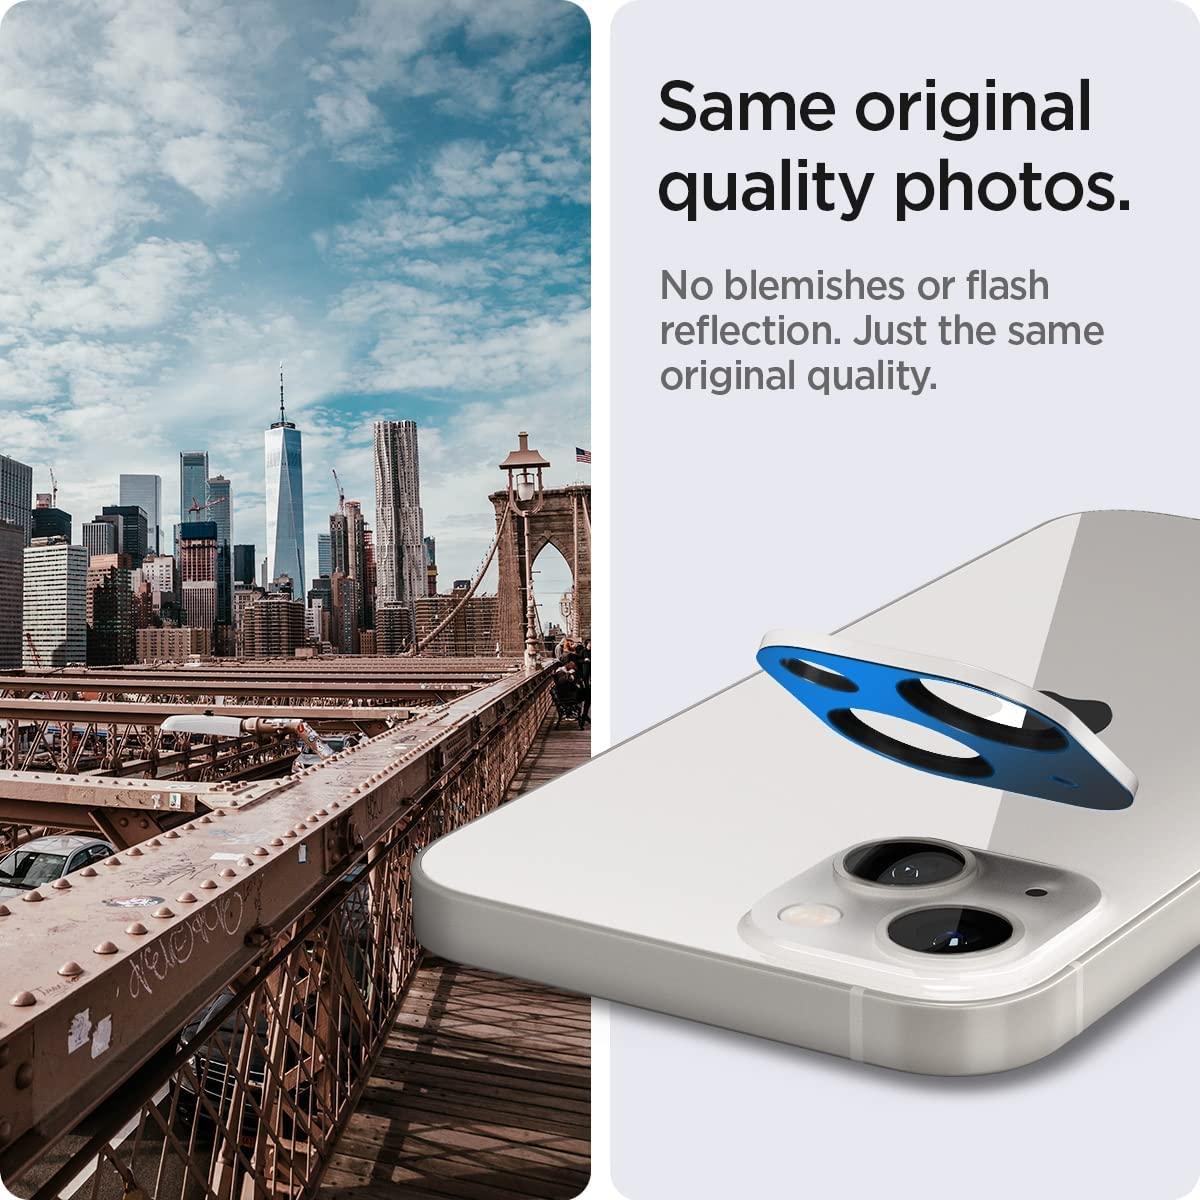 Spigen® (x2.Pack) GLAS.tR™ OPTIK Camera Lens AGL04038 iPhone 13 / iPhone 13 Mini Premium Tempered Glass - Starlight